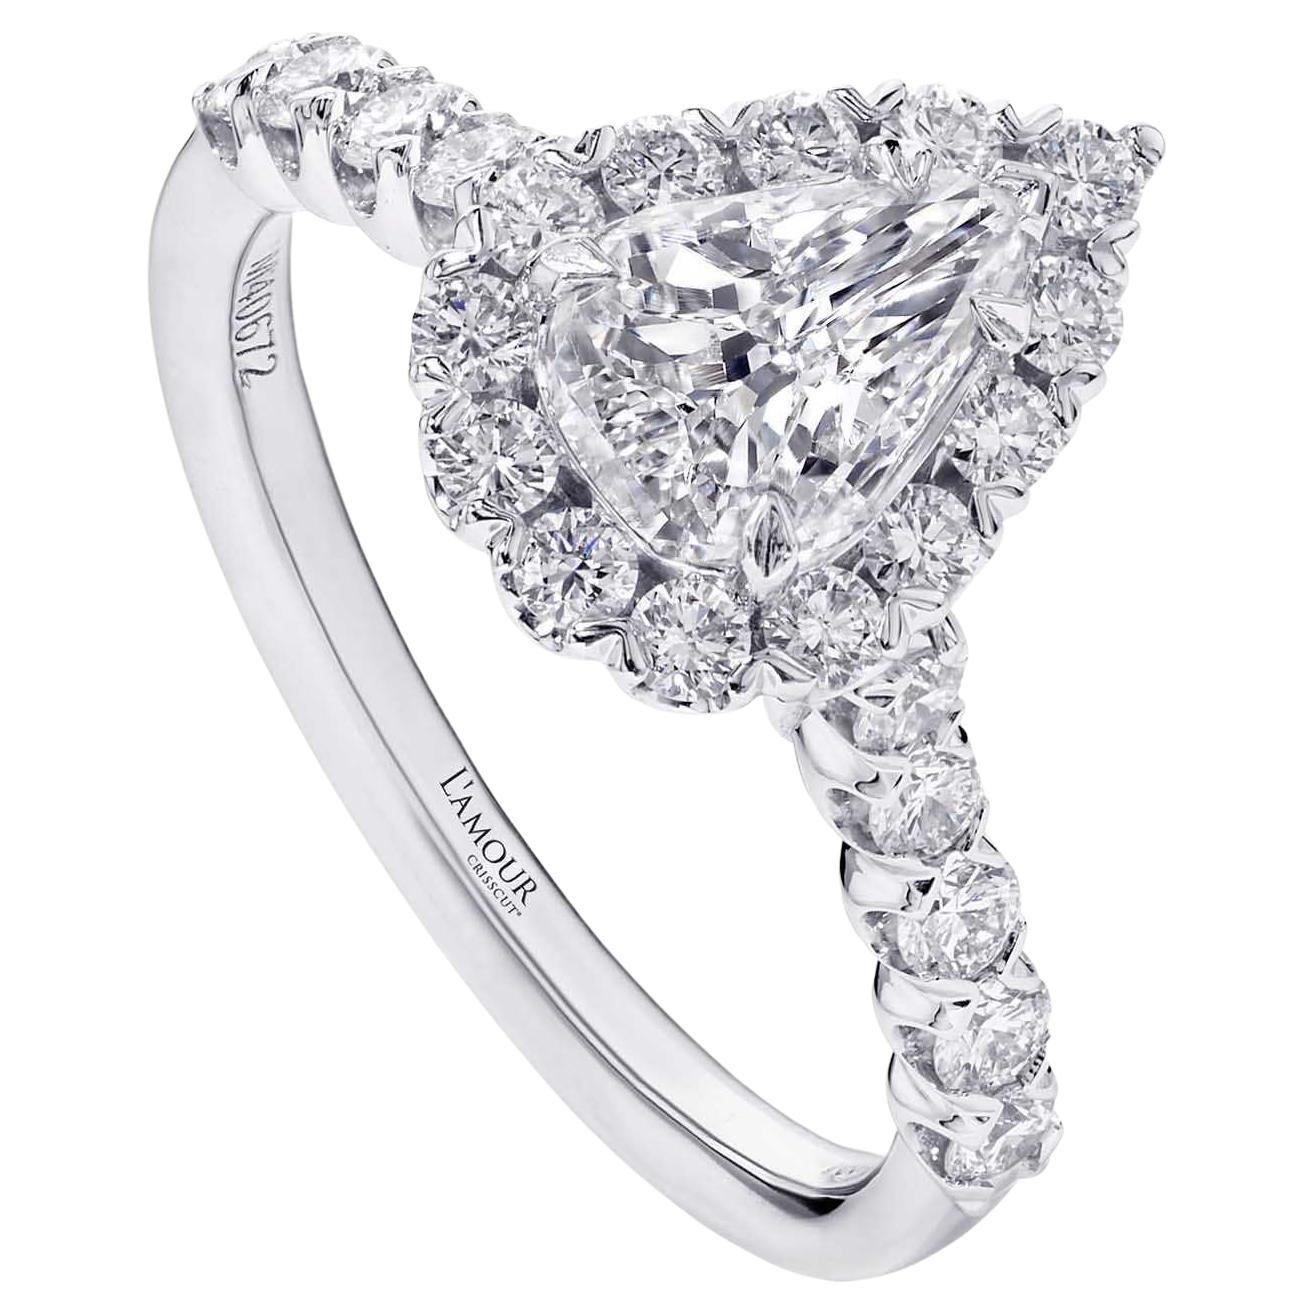 Christopher Designs L'Amour Crisscut Pear Shape Diamond GIA Engagement Ring